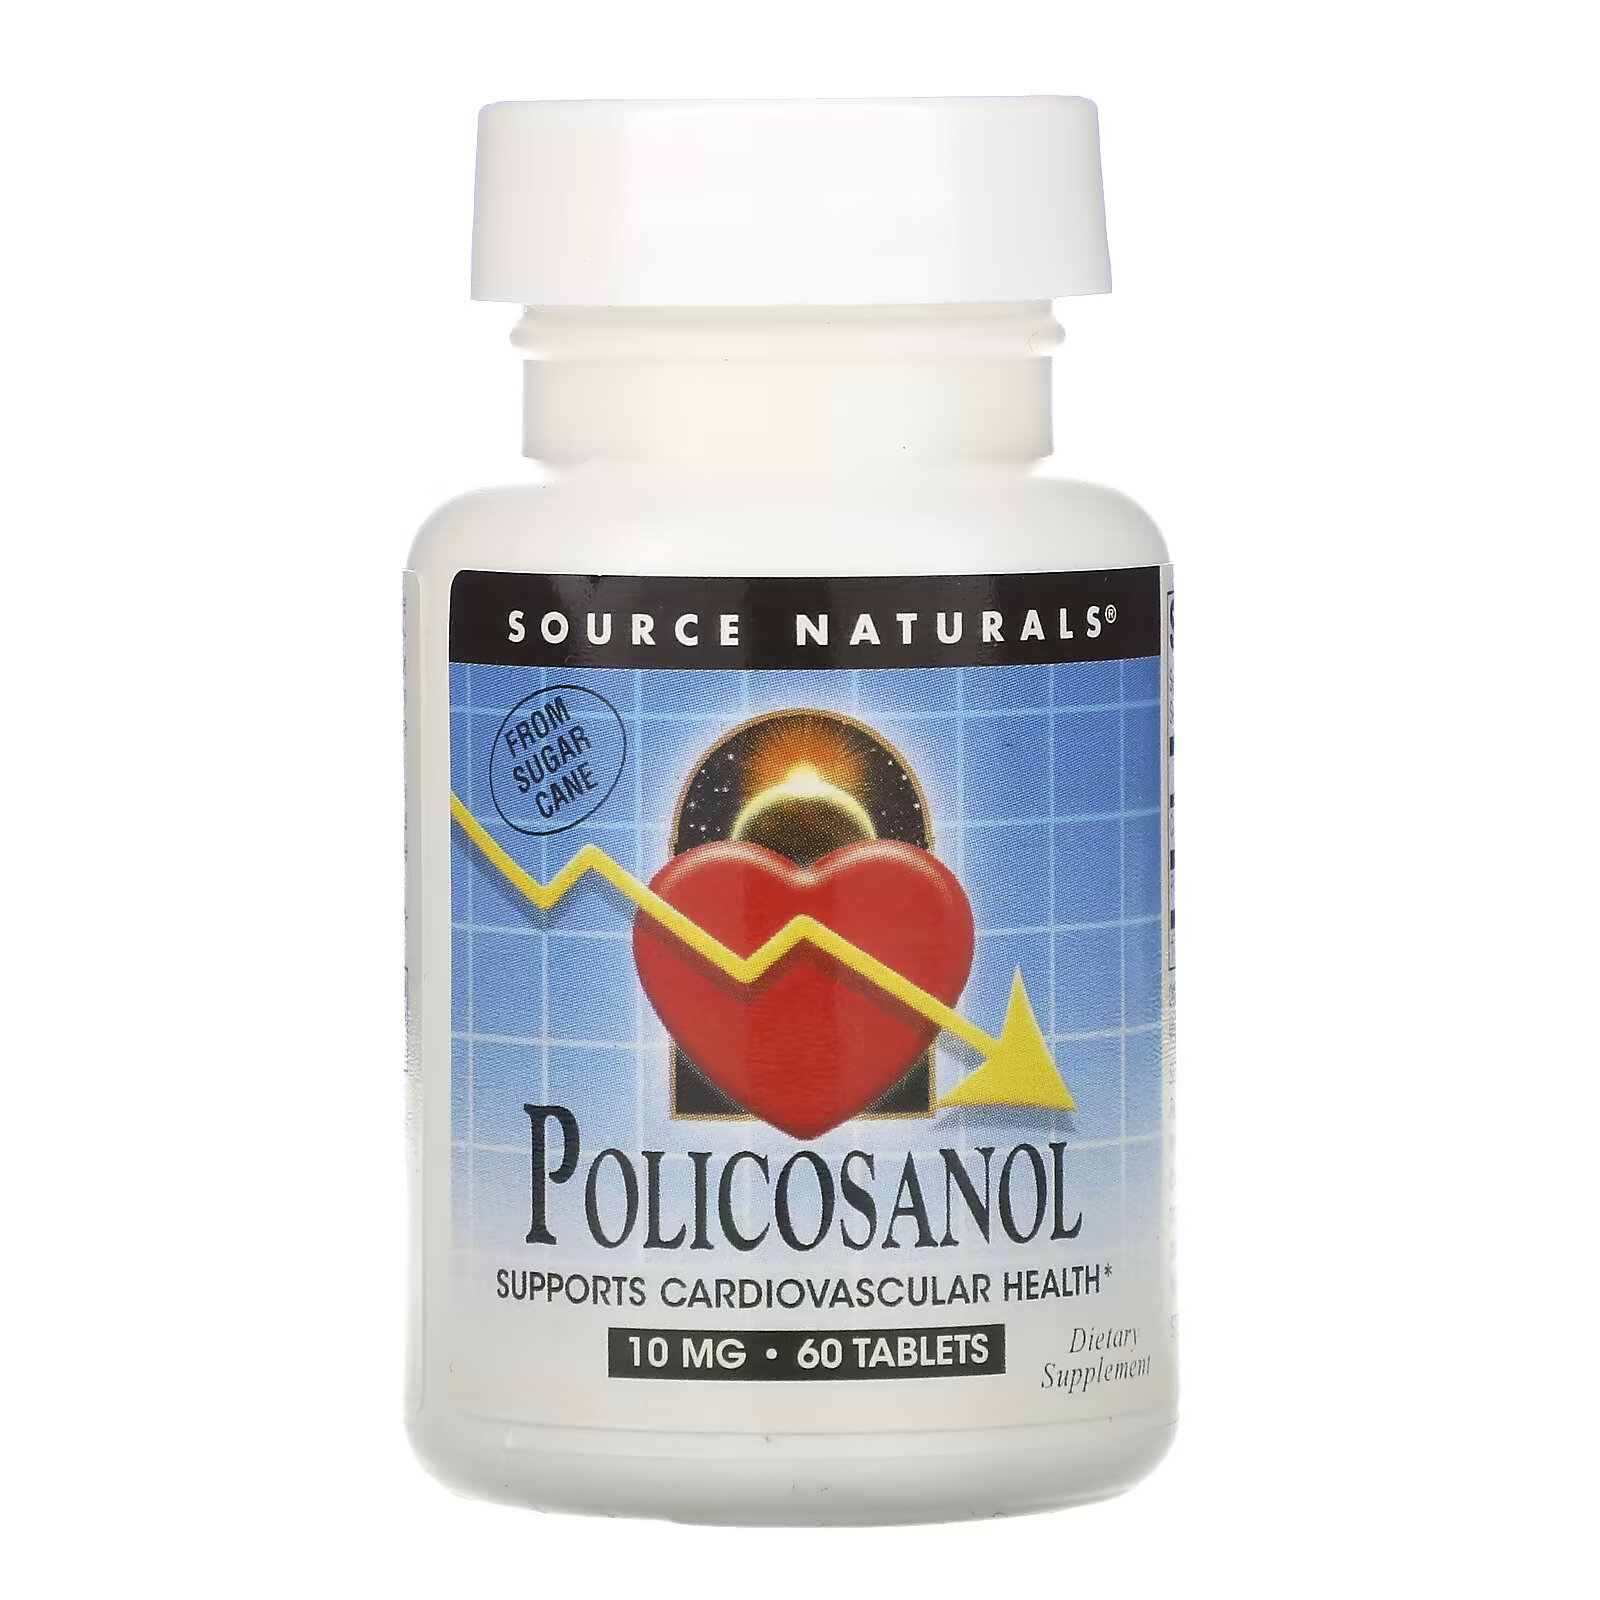 source naturals активные эллаготанины 300 мг 60 таблеток Source Naturals, поликосанол, 10 мг, 60 таблеток